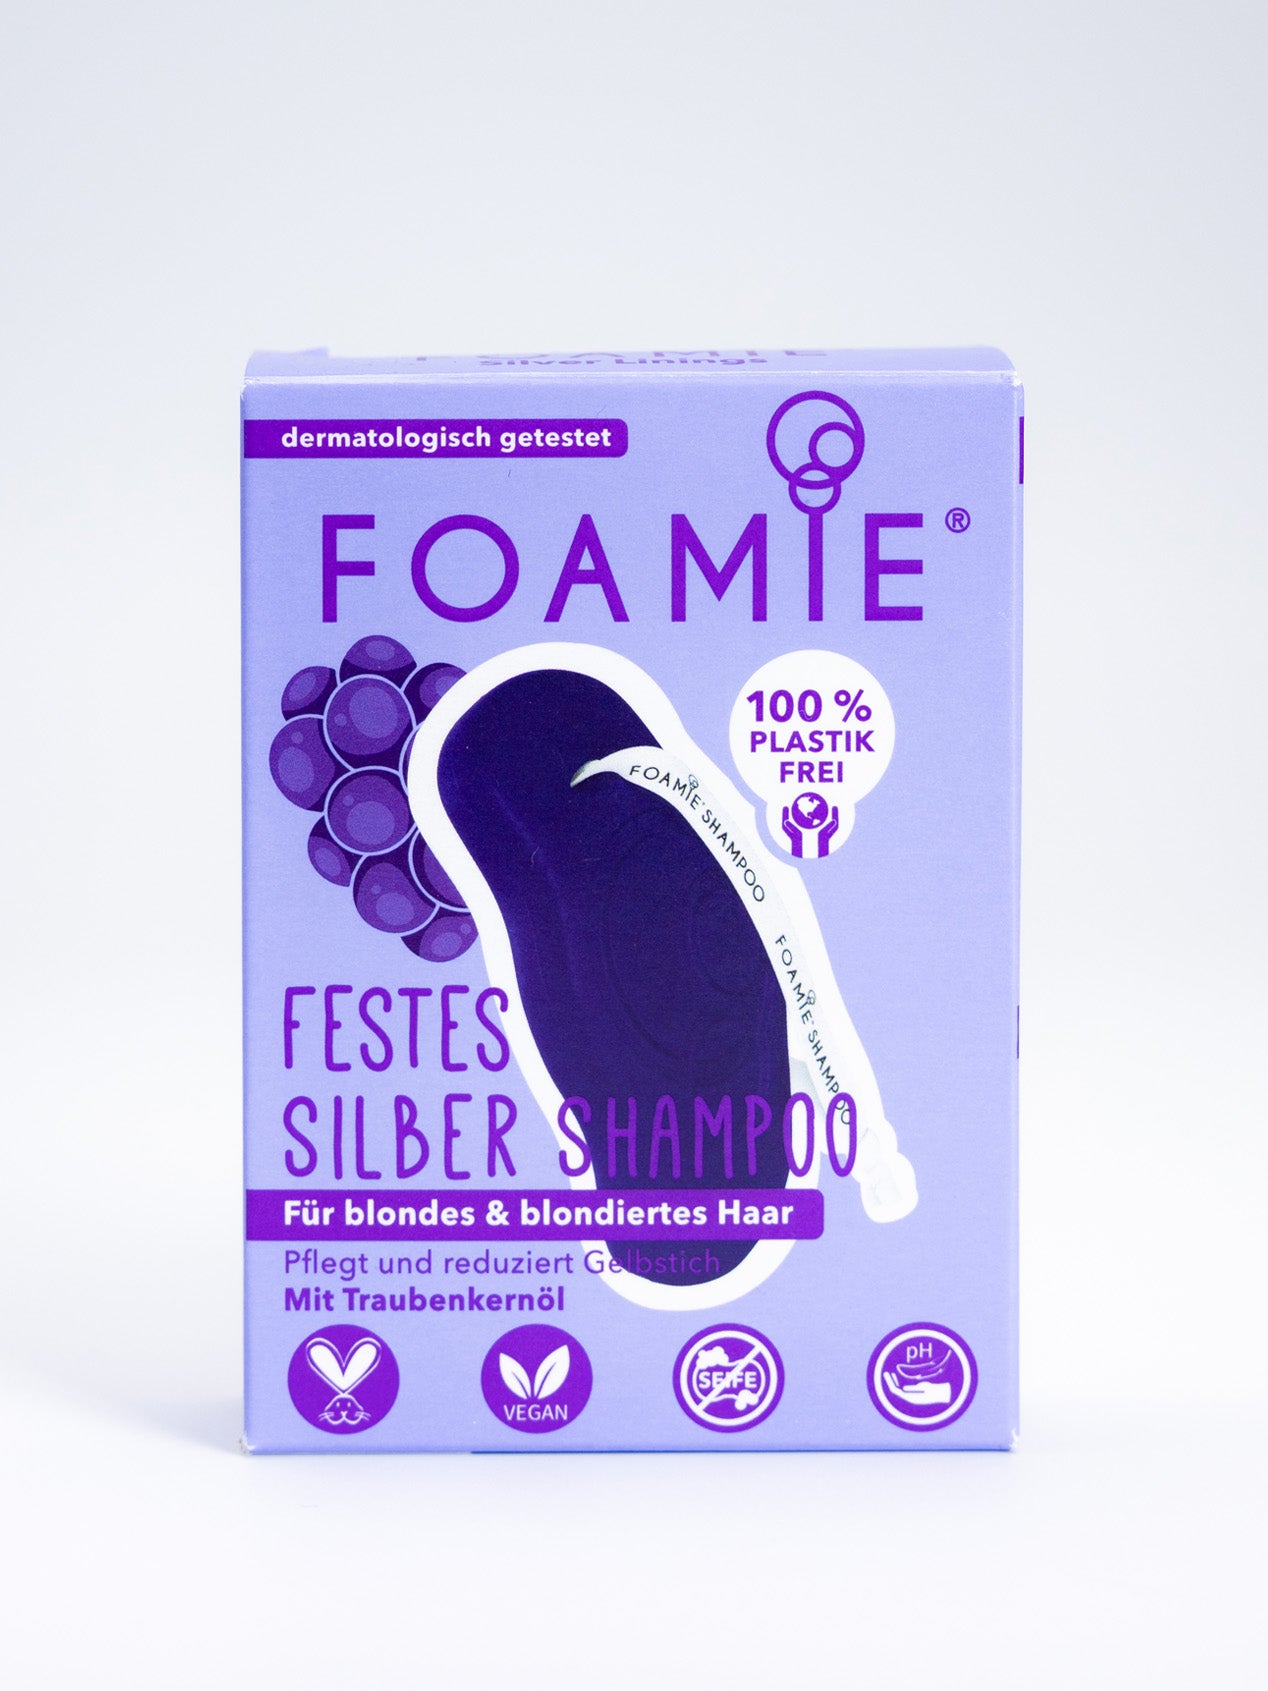 Foamie Festes Shampoo Silver Linings (80g)